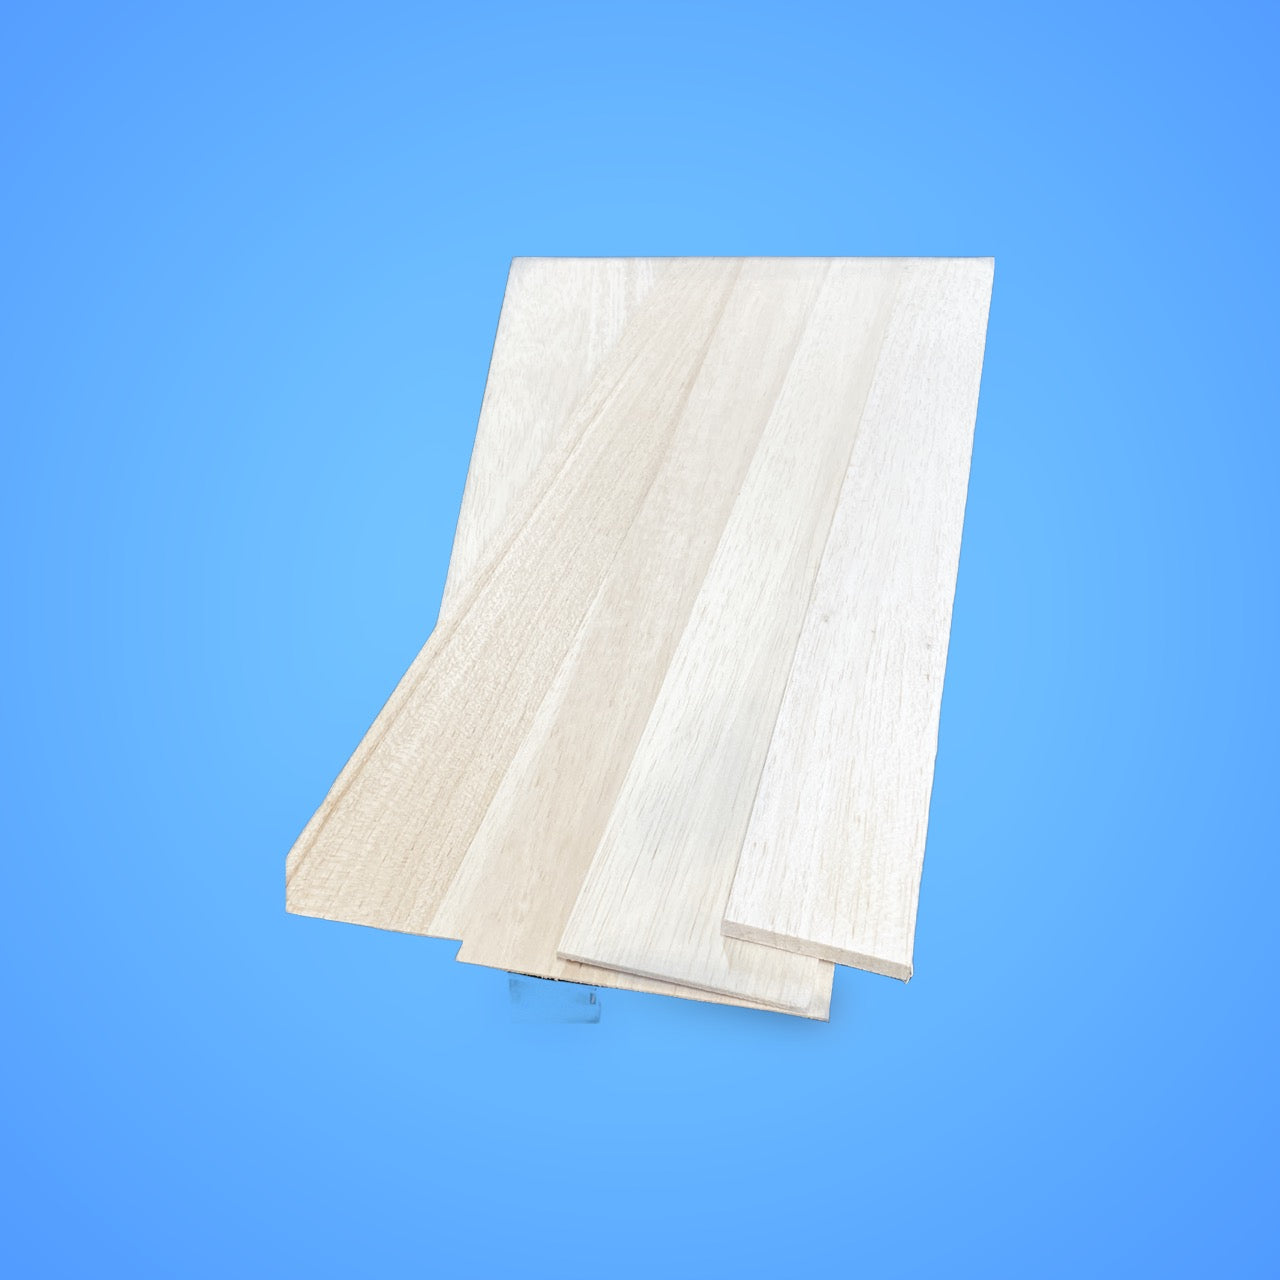 1/16 x 3 x 36 Aero Light Balsa Wood Sheet